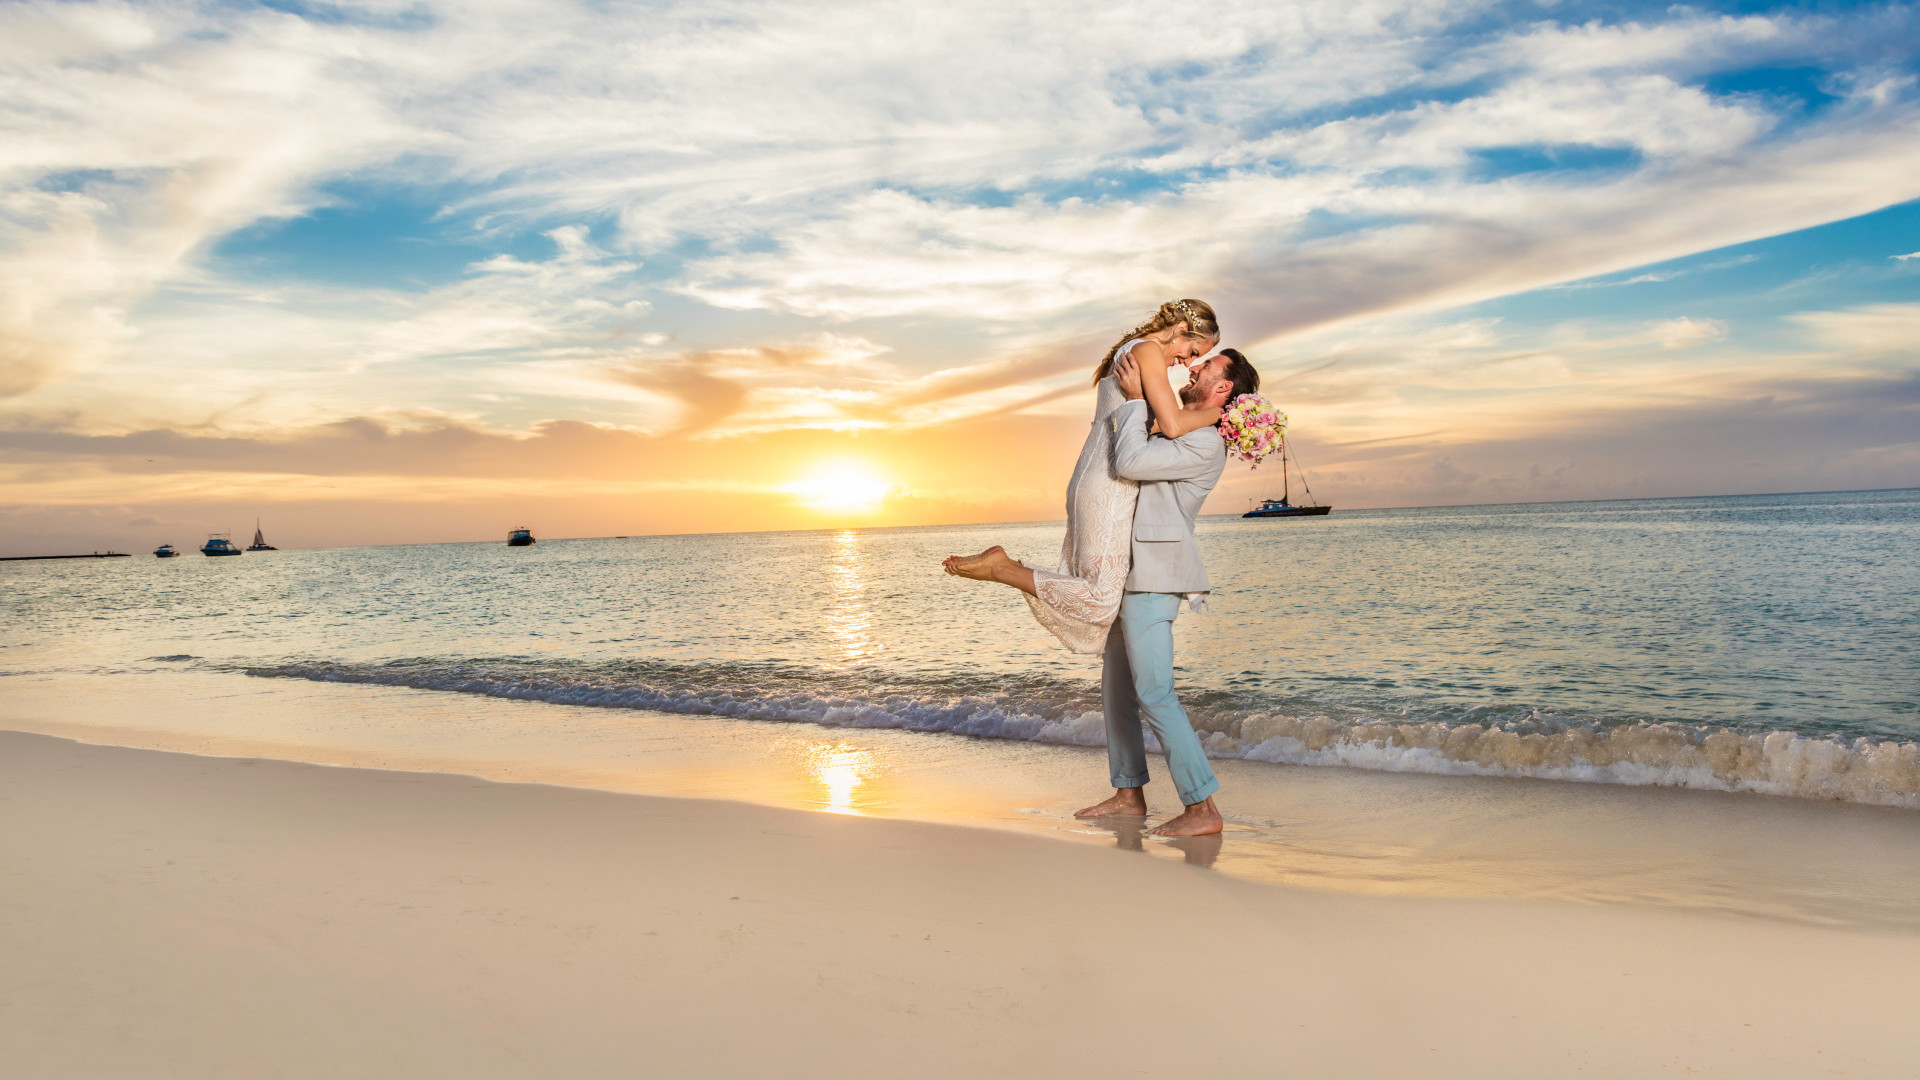 Wedding couple on beach - man lifting woman up